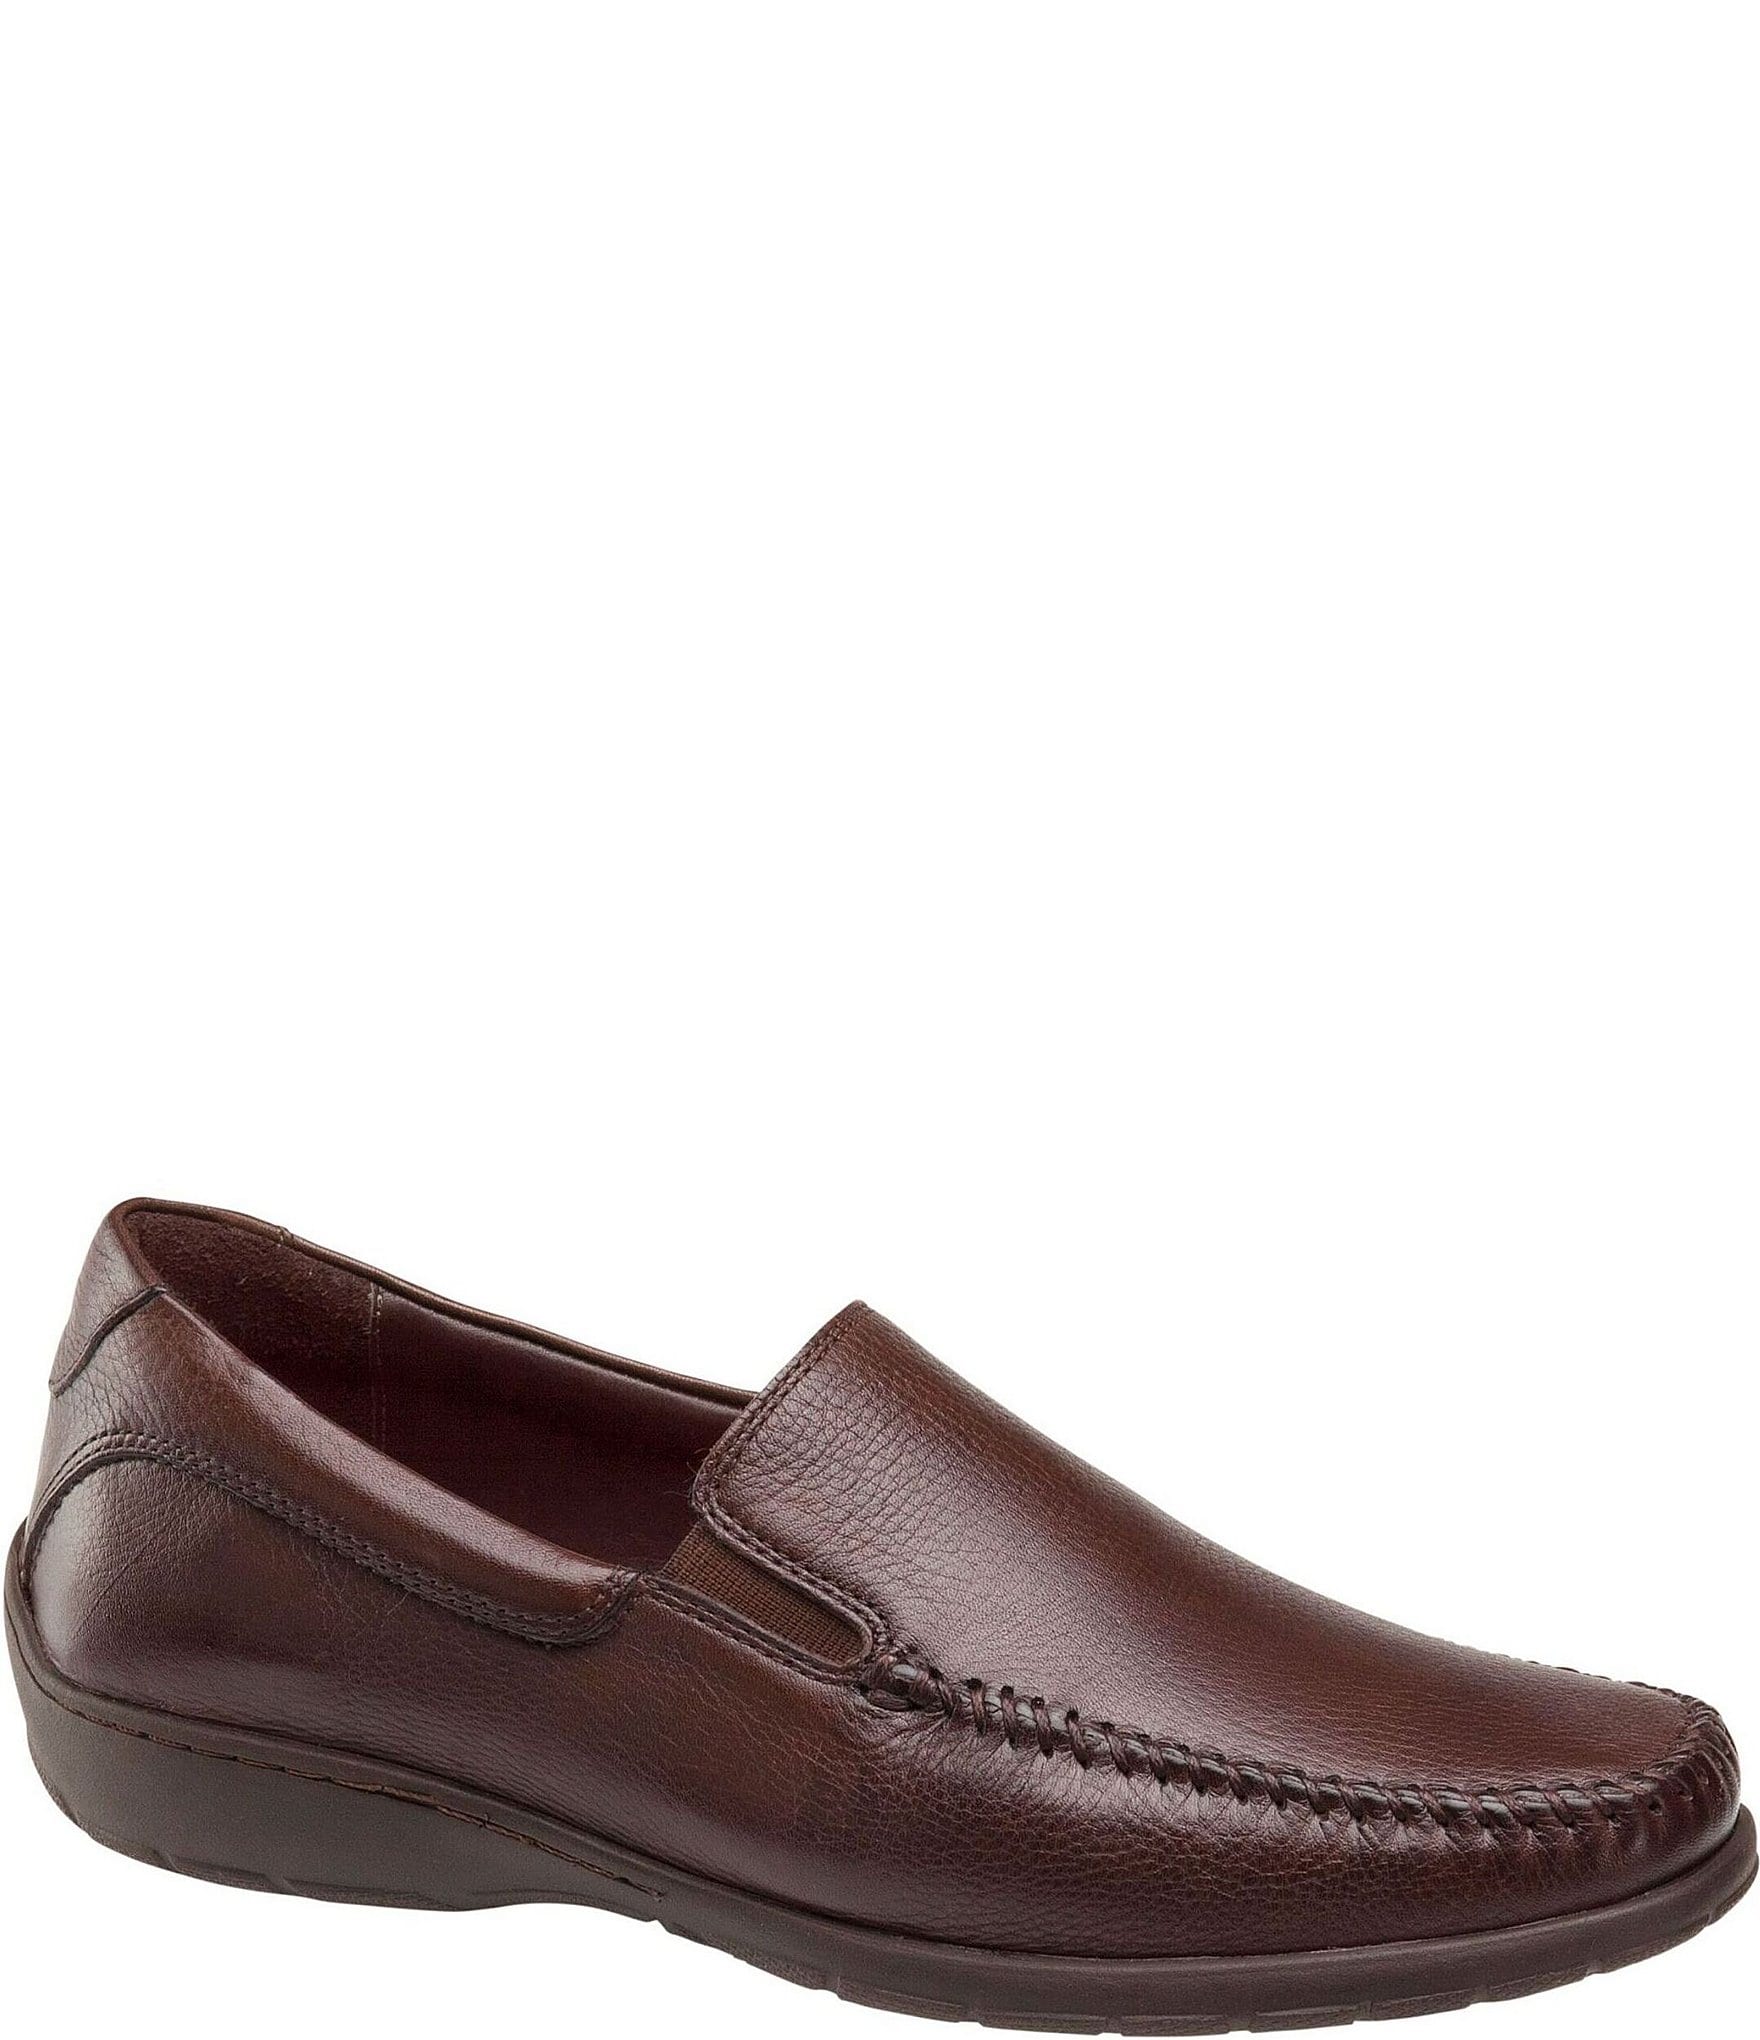 men's casual shoes narrow width